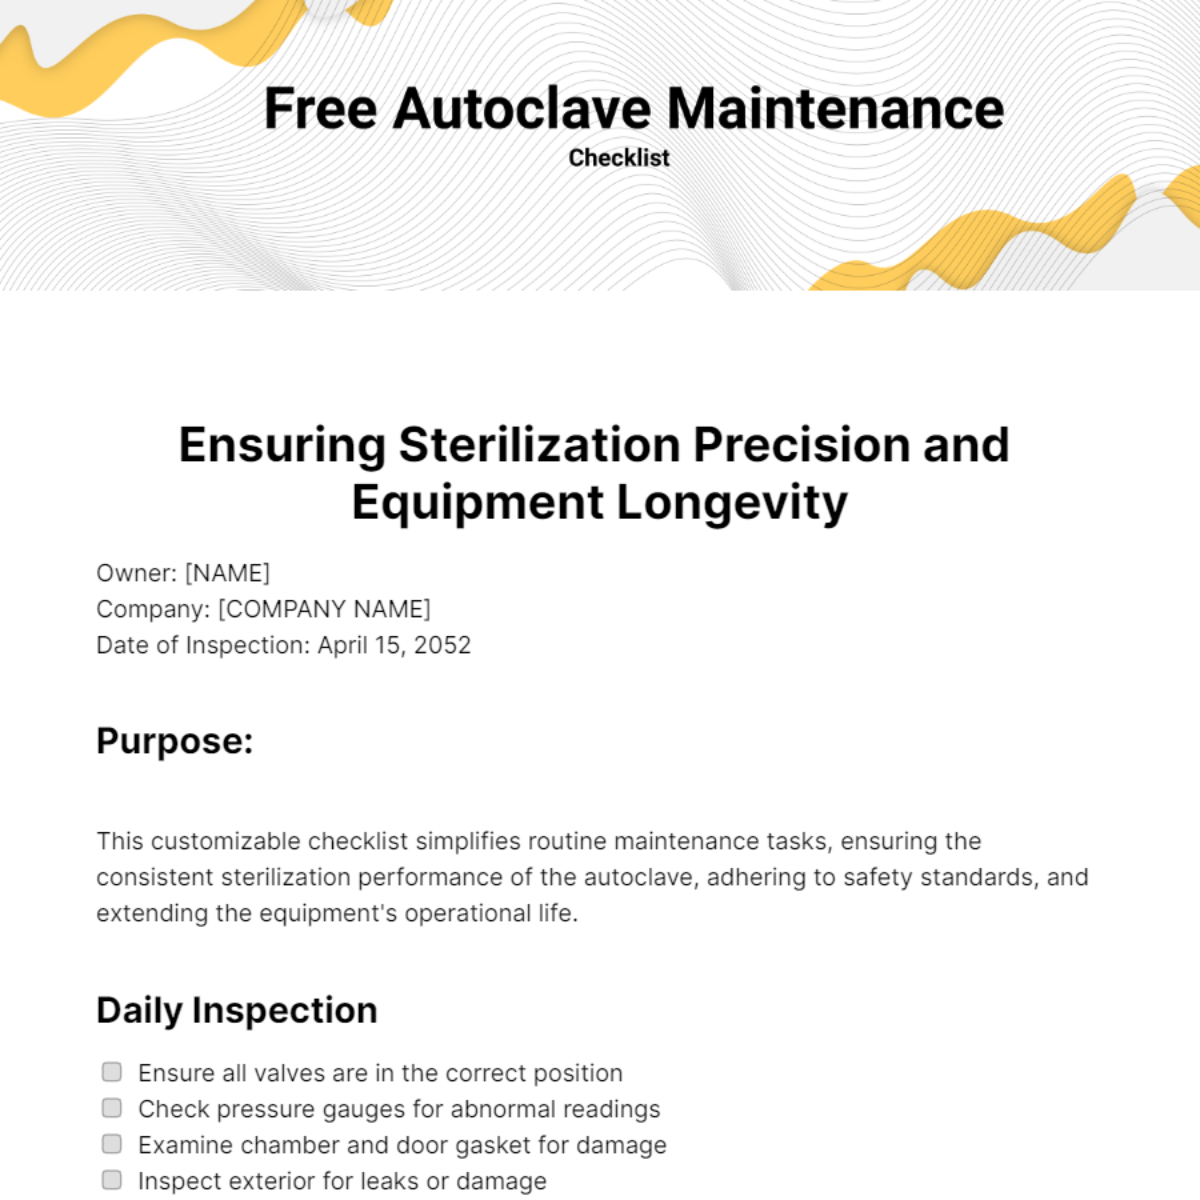 Free Autoclave Maintenance Checklist Template